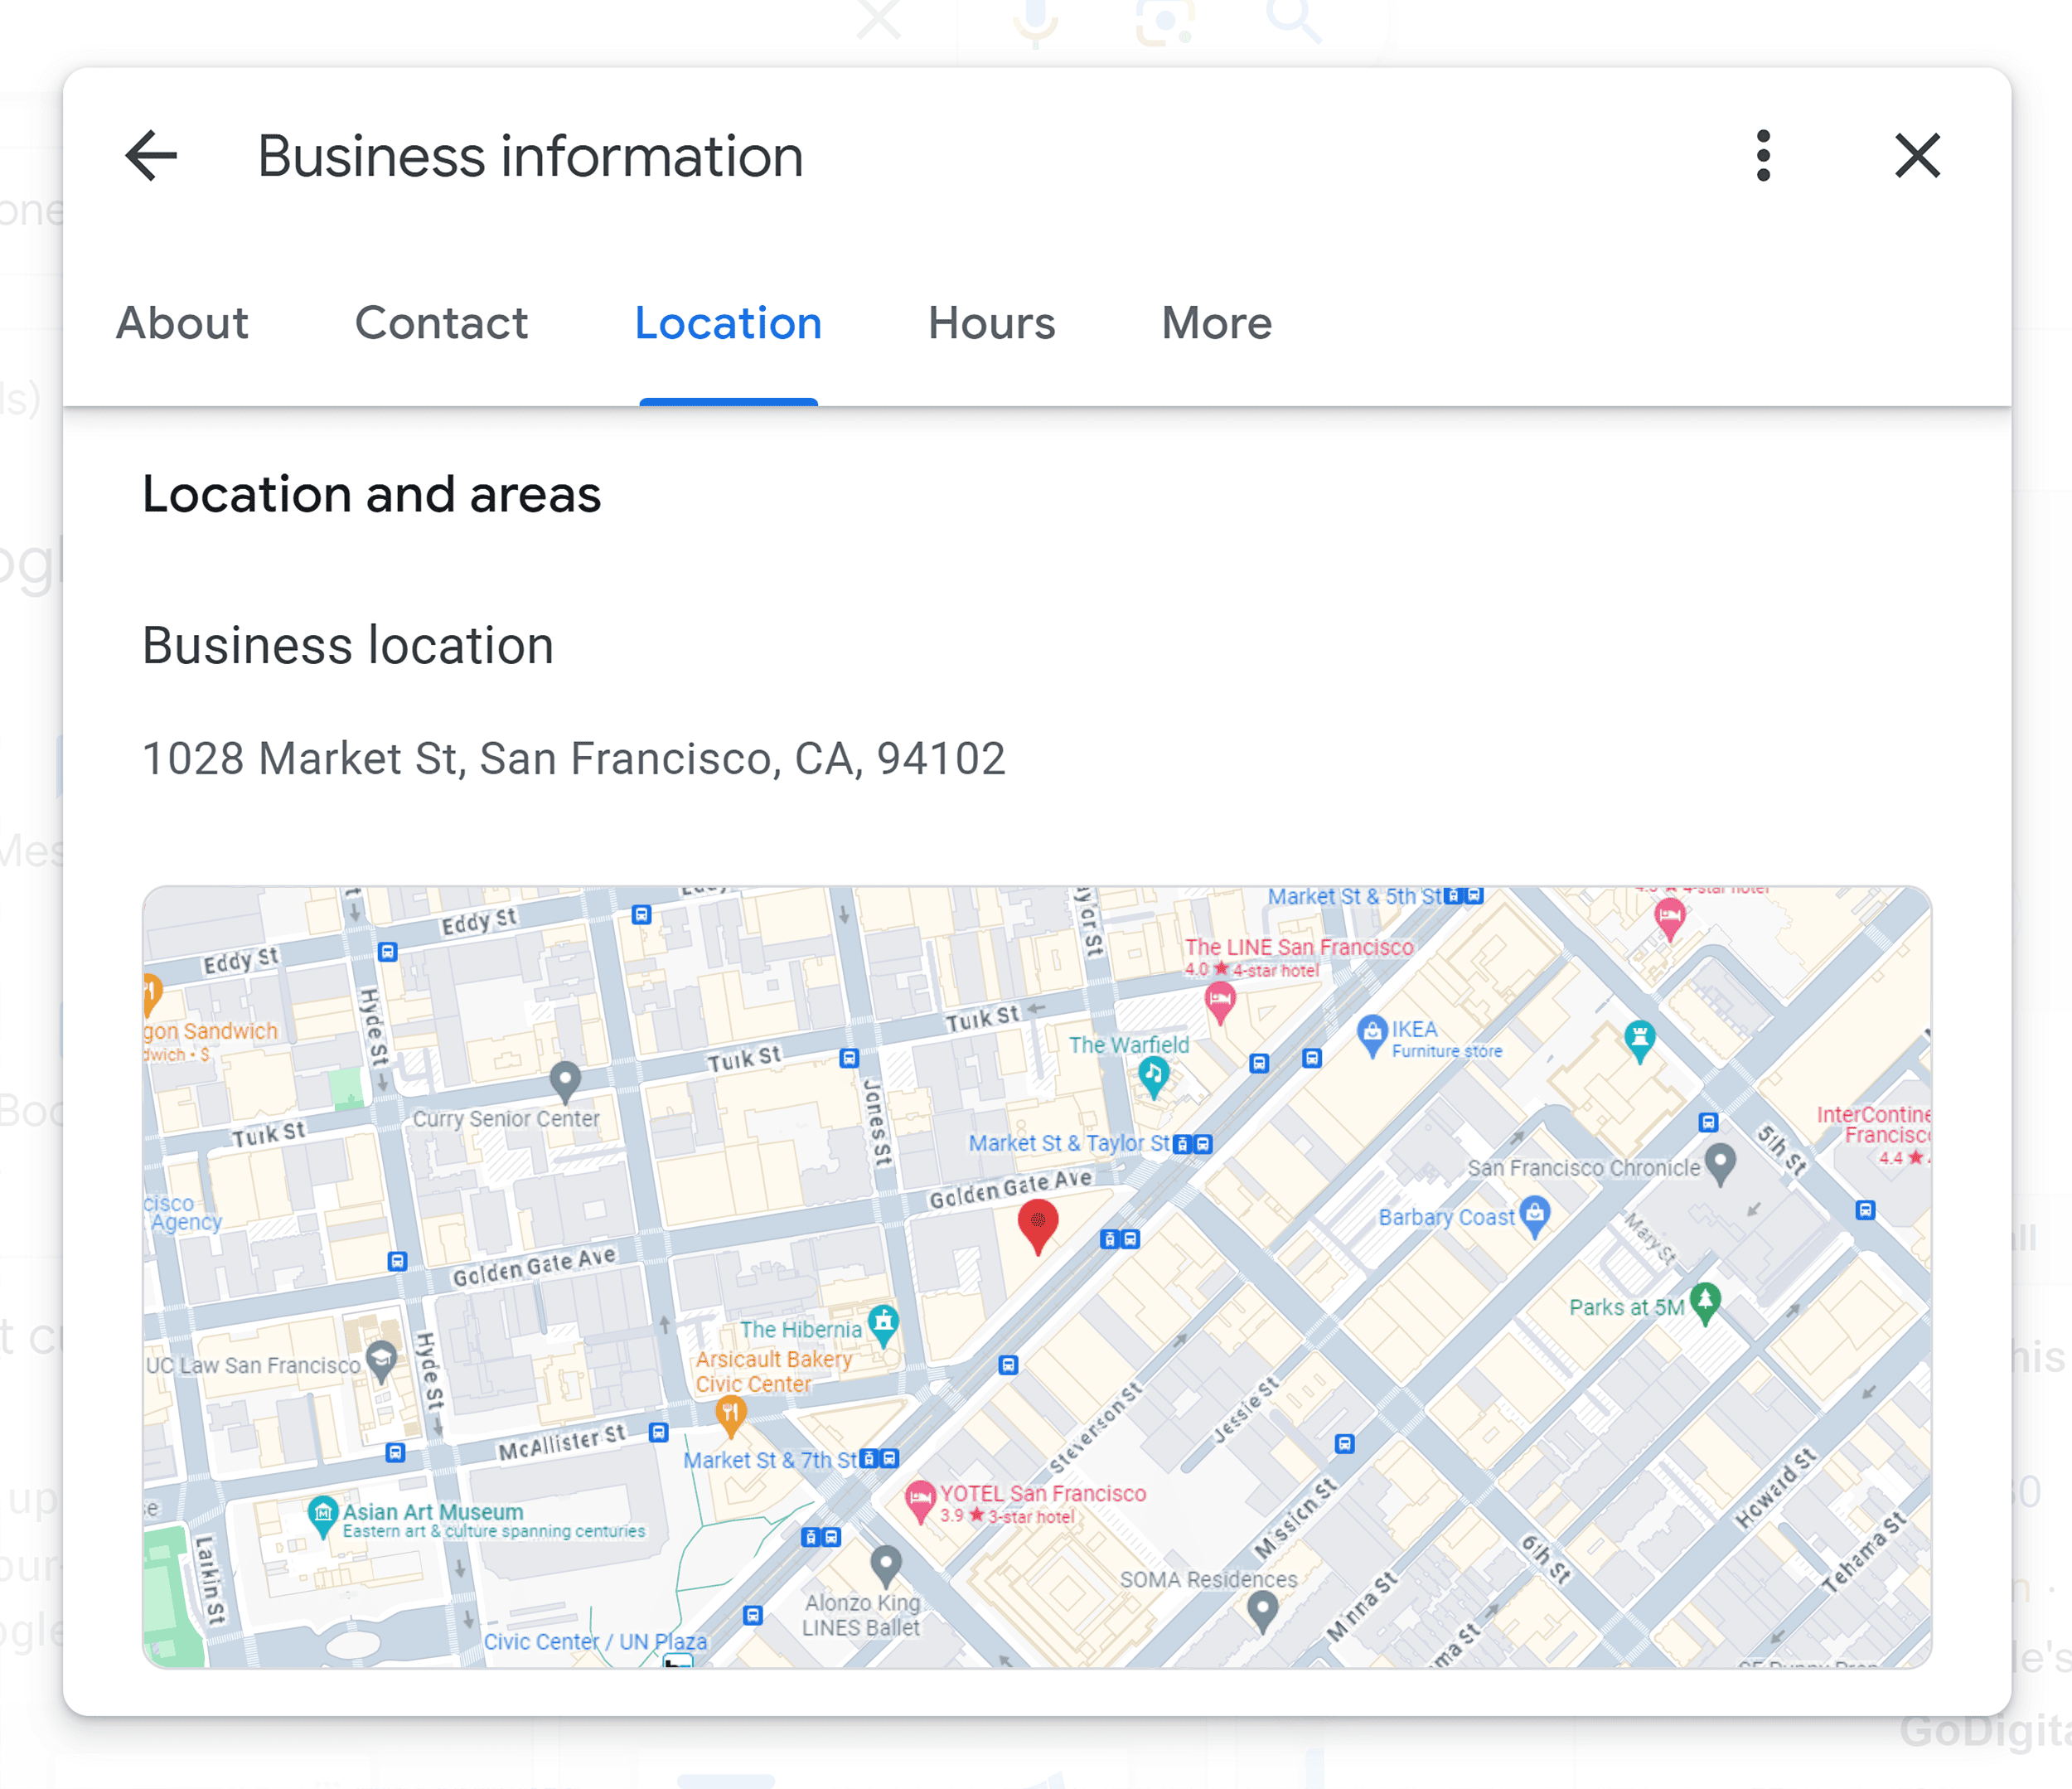 Business location – Update address